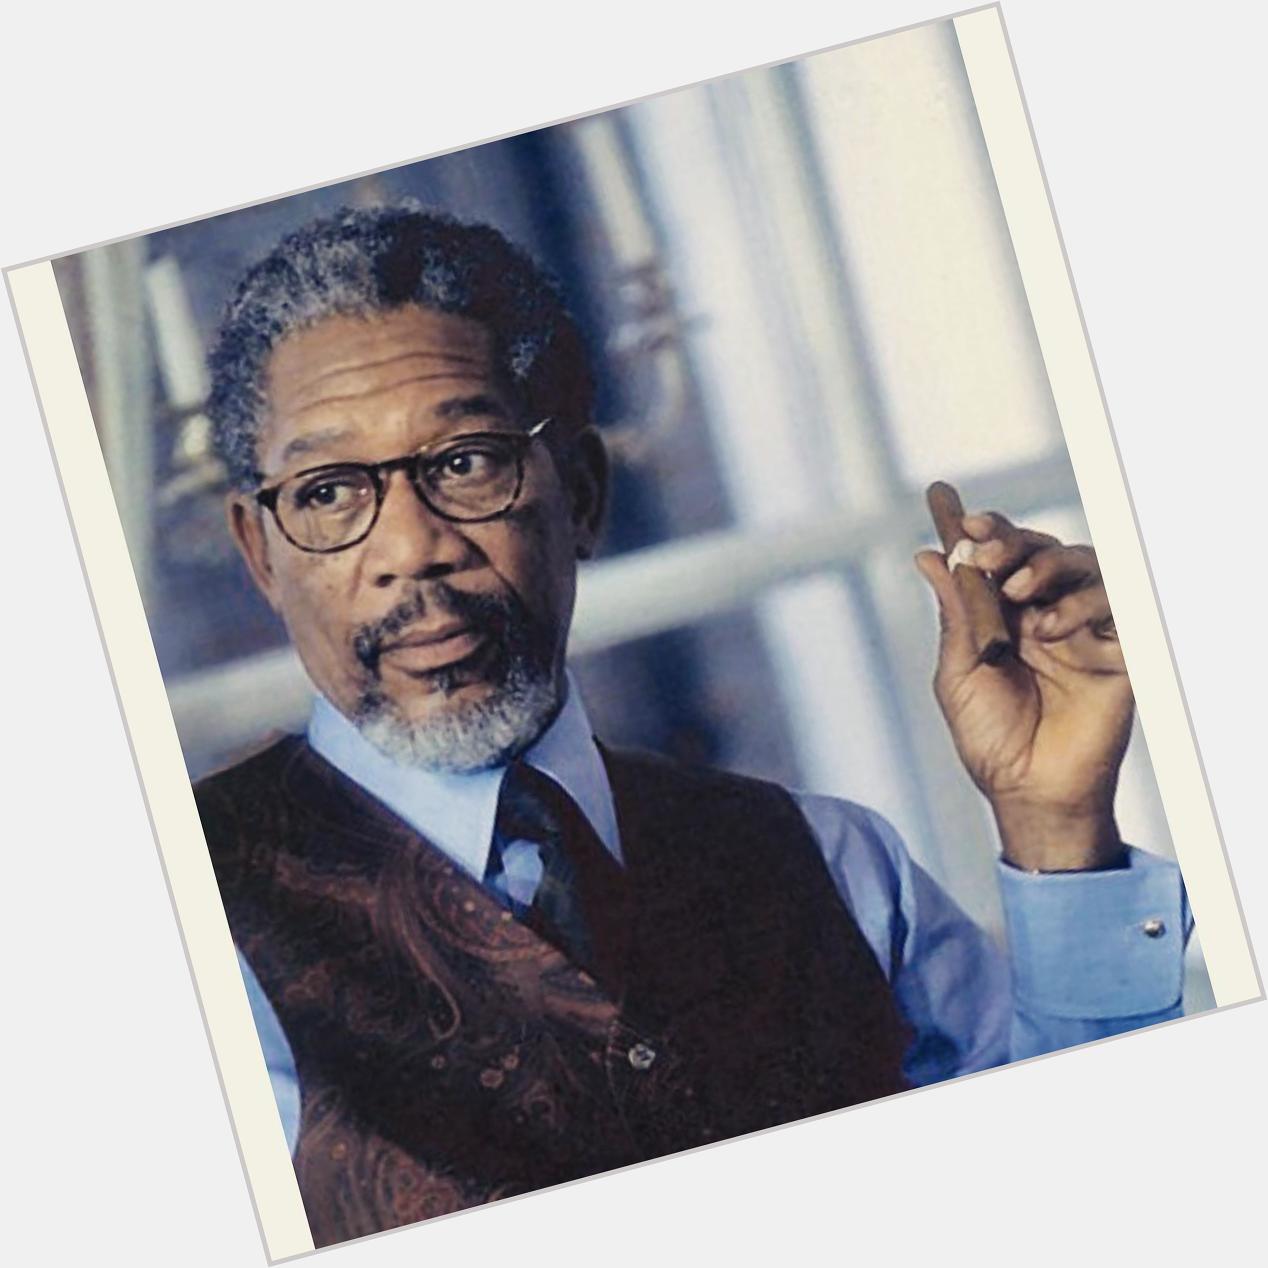 Morgan Freeman. Always classy. Happy Birthday to you, sir. 